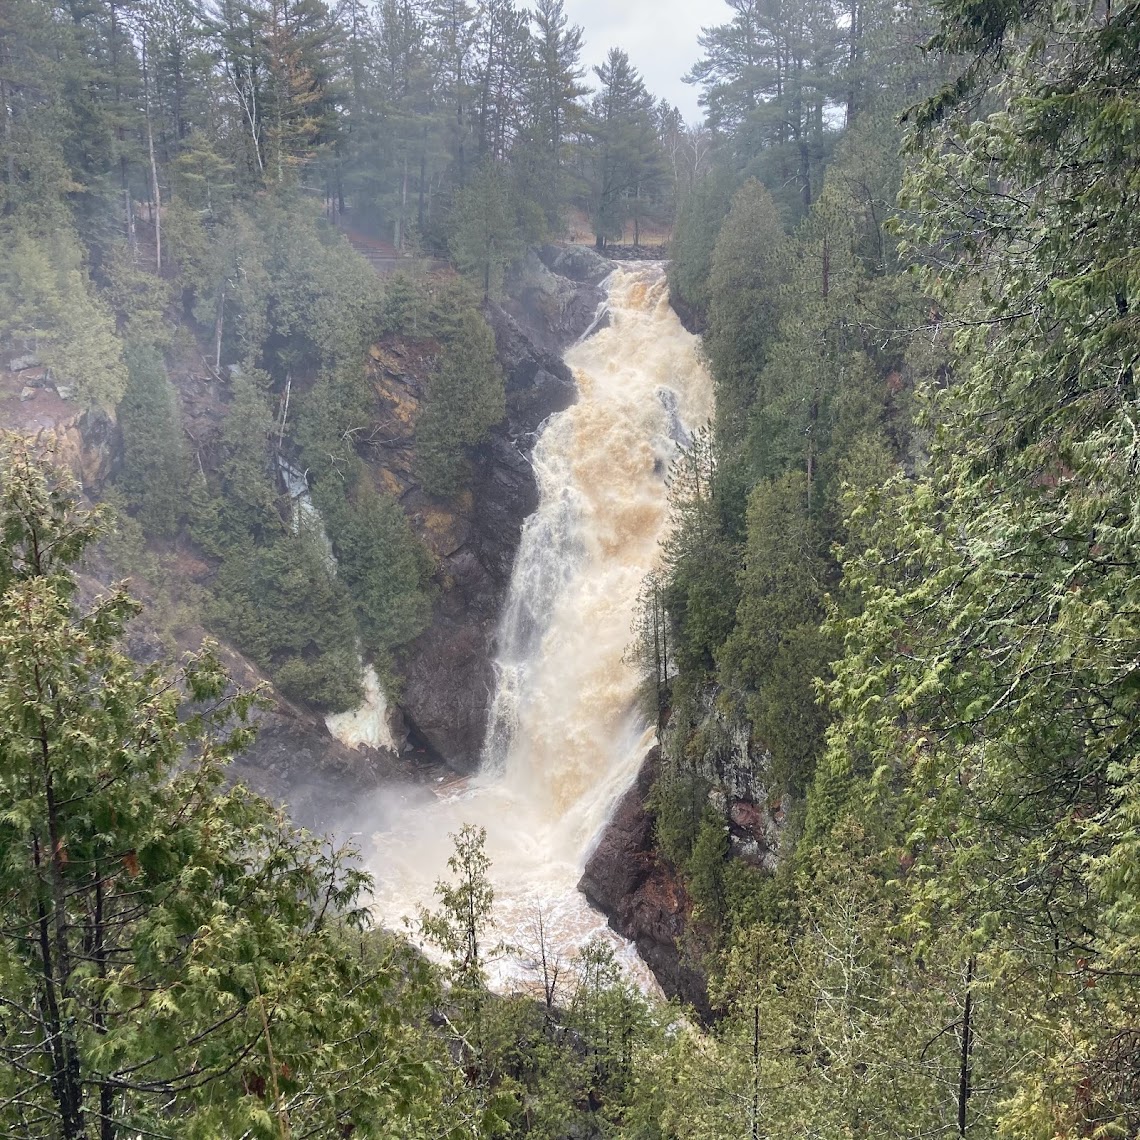 Big Manitou Falls in Pattison State Park in Superior, WI